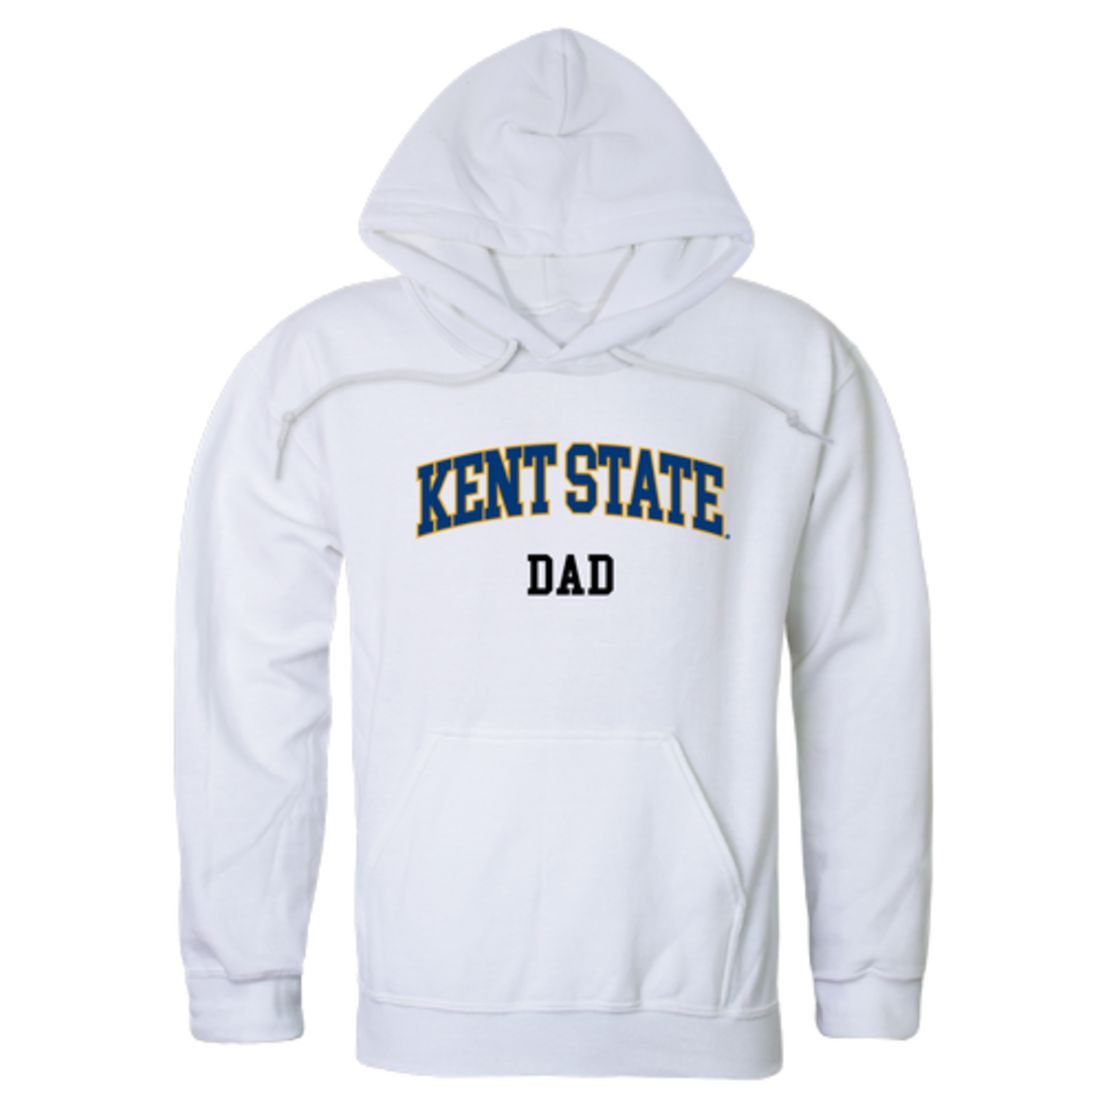 KSU Kent State University The Golden Eagles Dad Fleece Hoodie Sweatshirts Heather Grey-Campus-Wardrobe